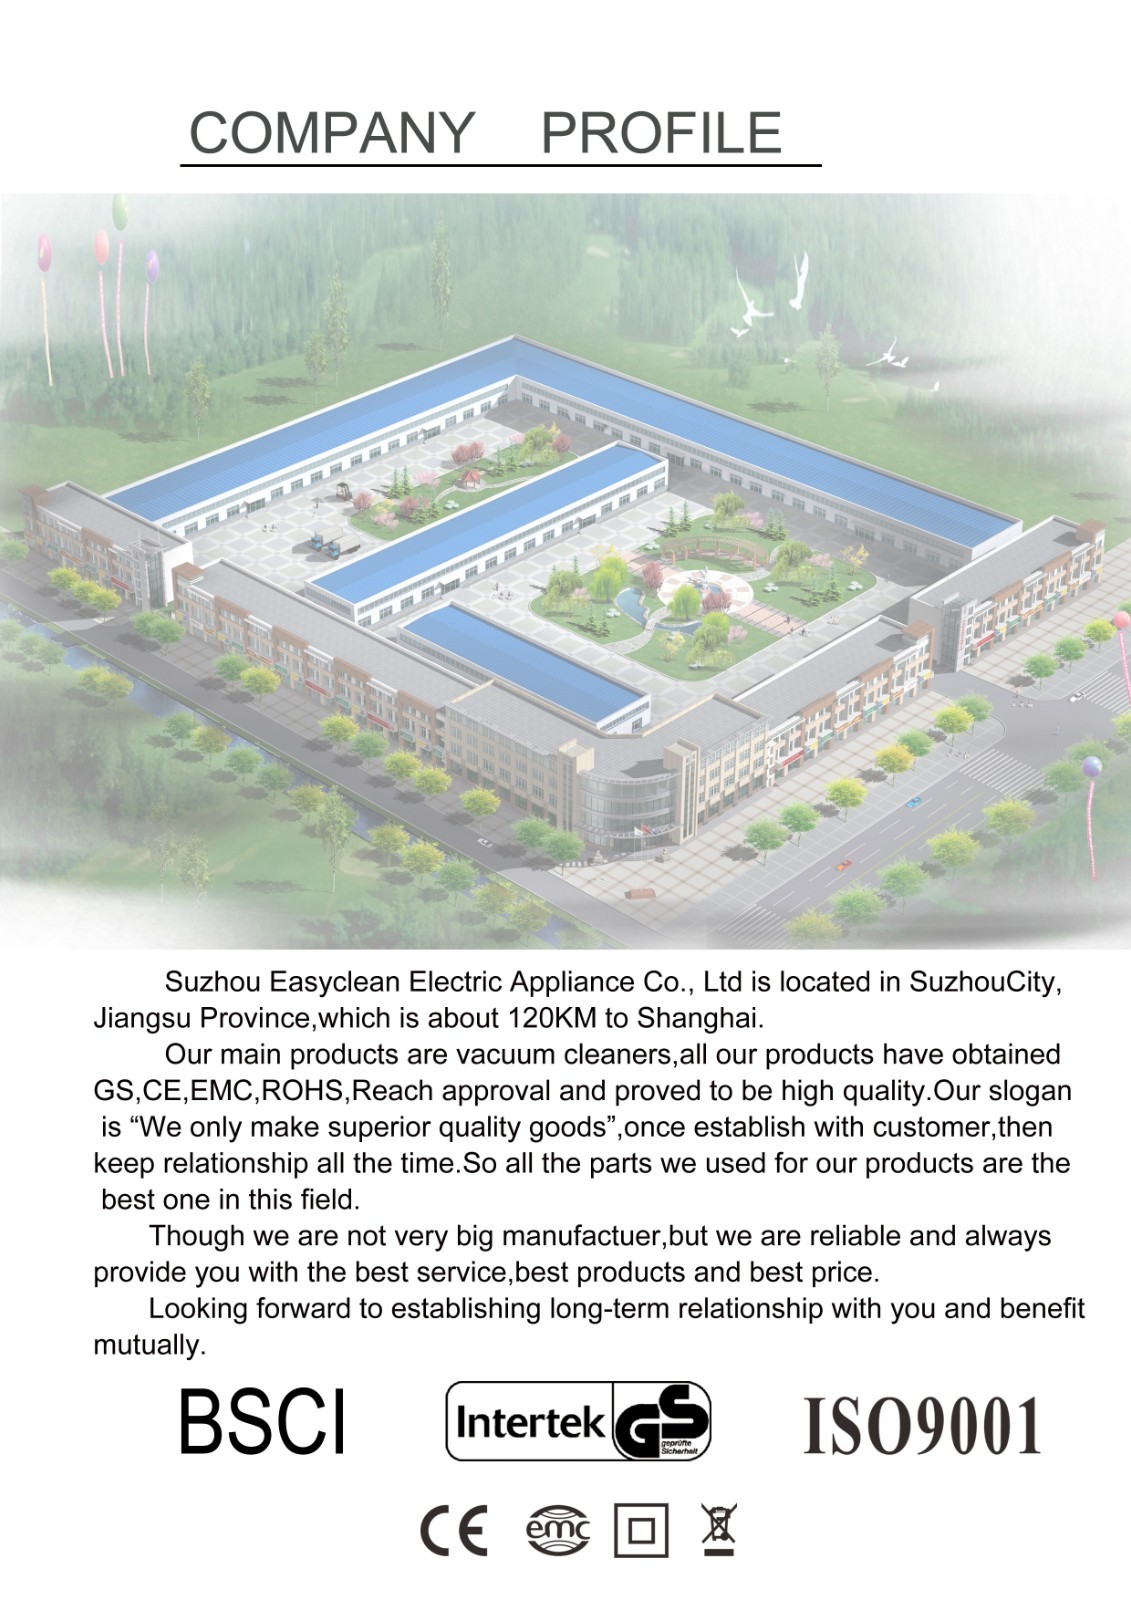 Suzhou Easyclean Electric Appliance Co., Ltd.